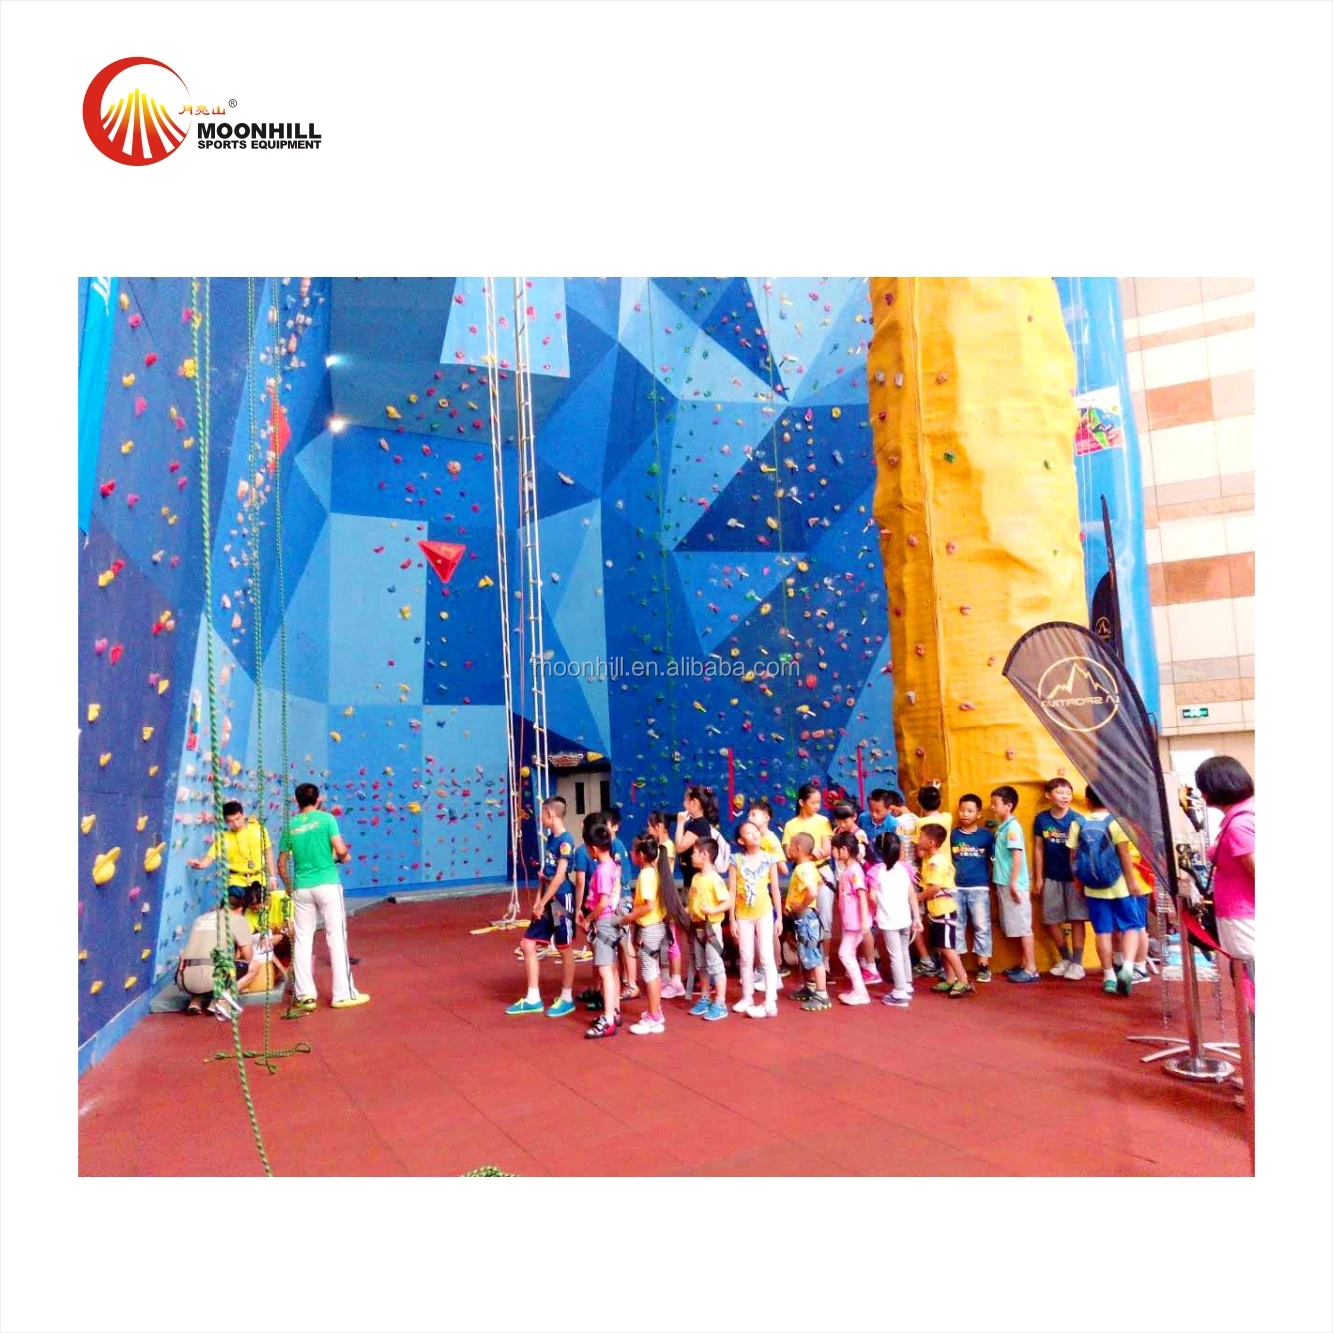 
Muro de escalada de fibra de vidrio de interior para adultos escalar  (62178516656)